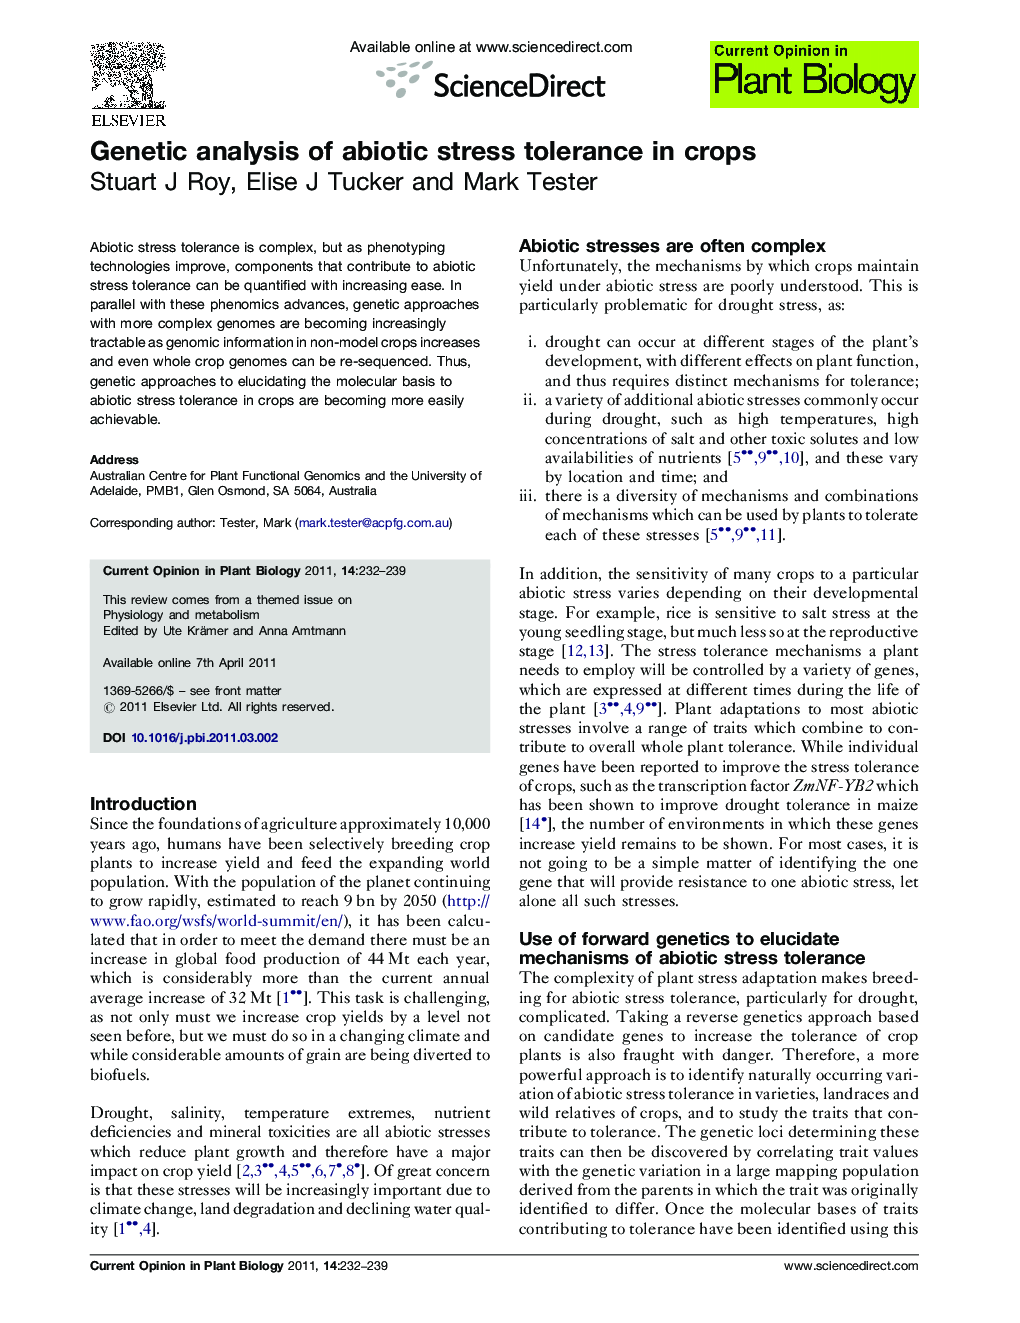 Genetic analysis of abiotic stress tolerance in crops